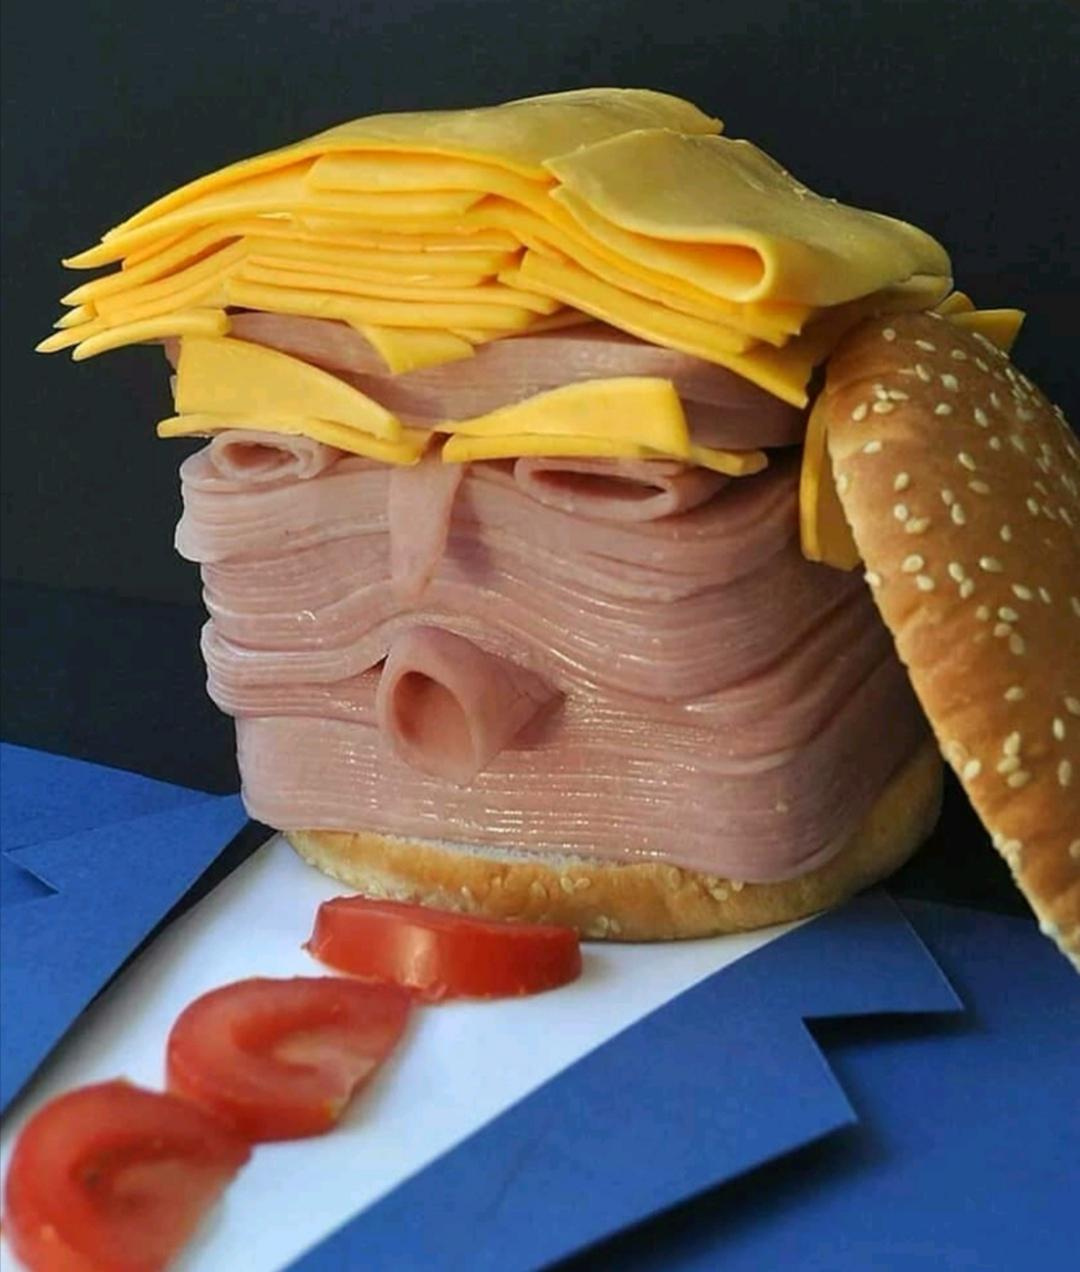 donald trump spam sandwich